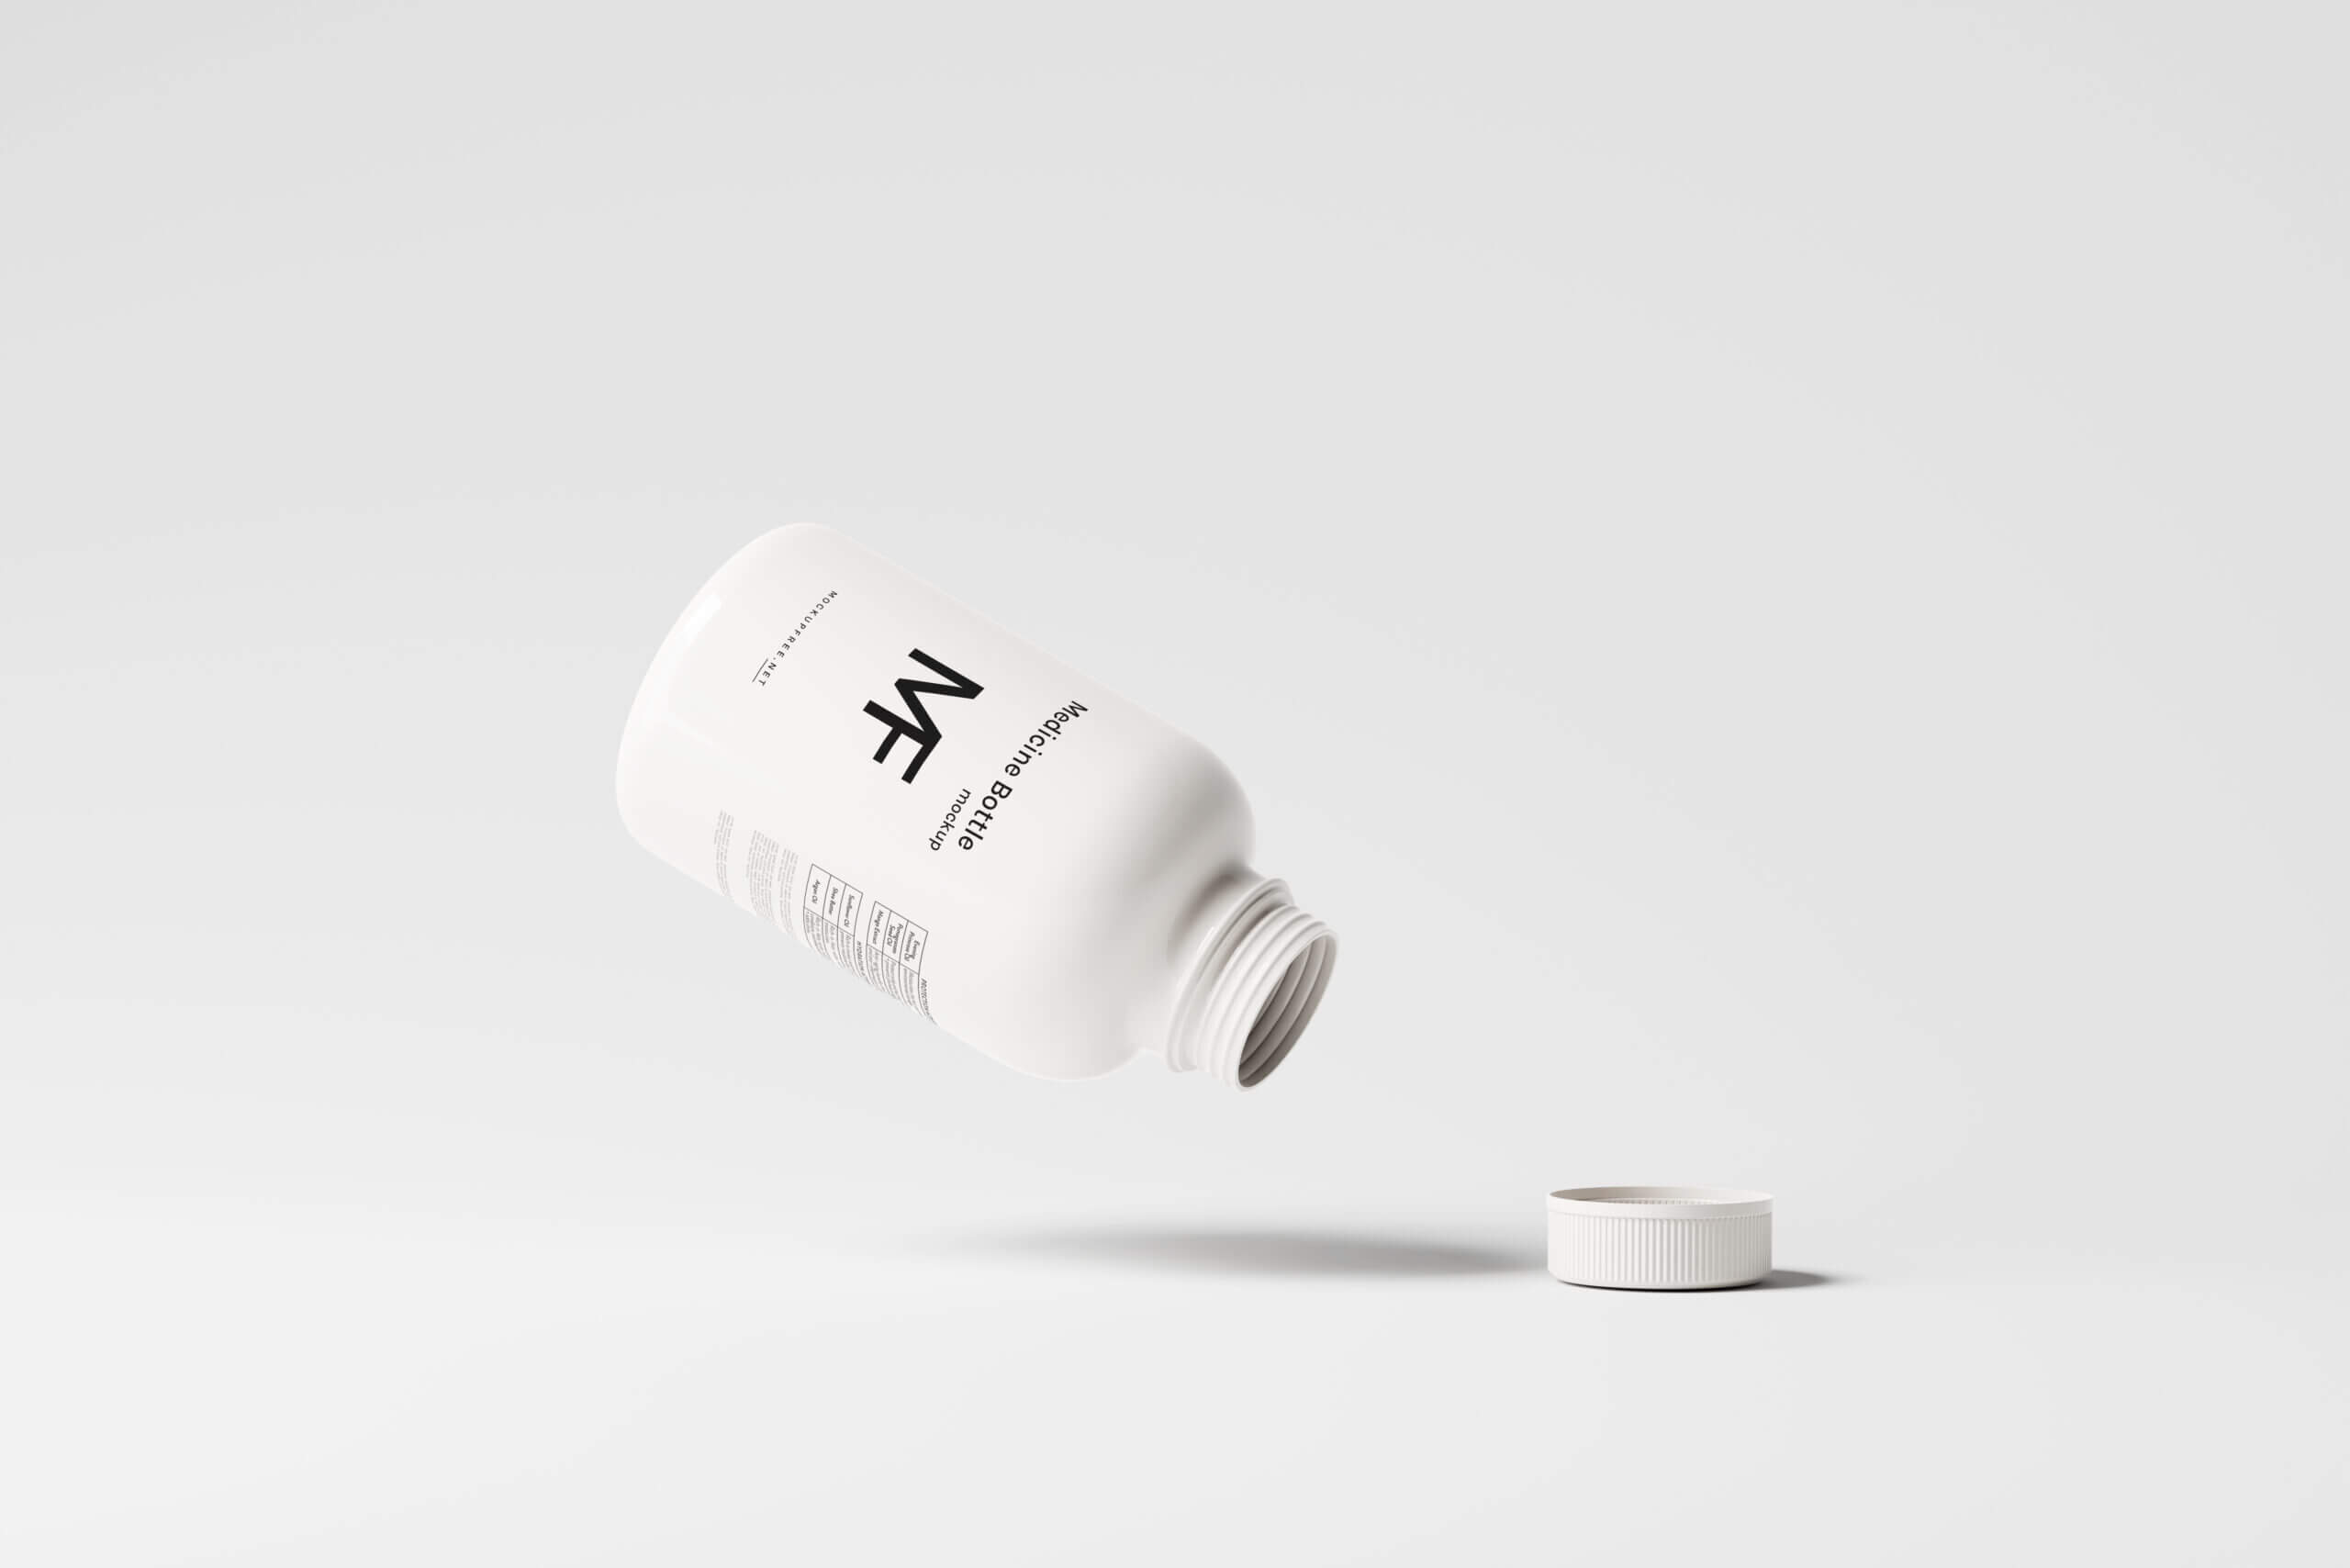 11 Free Plastic Supplements Pills Medicine Bottle Mockup PSD Files2